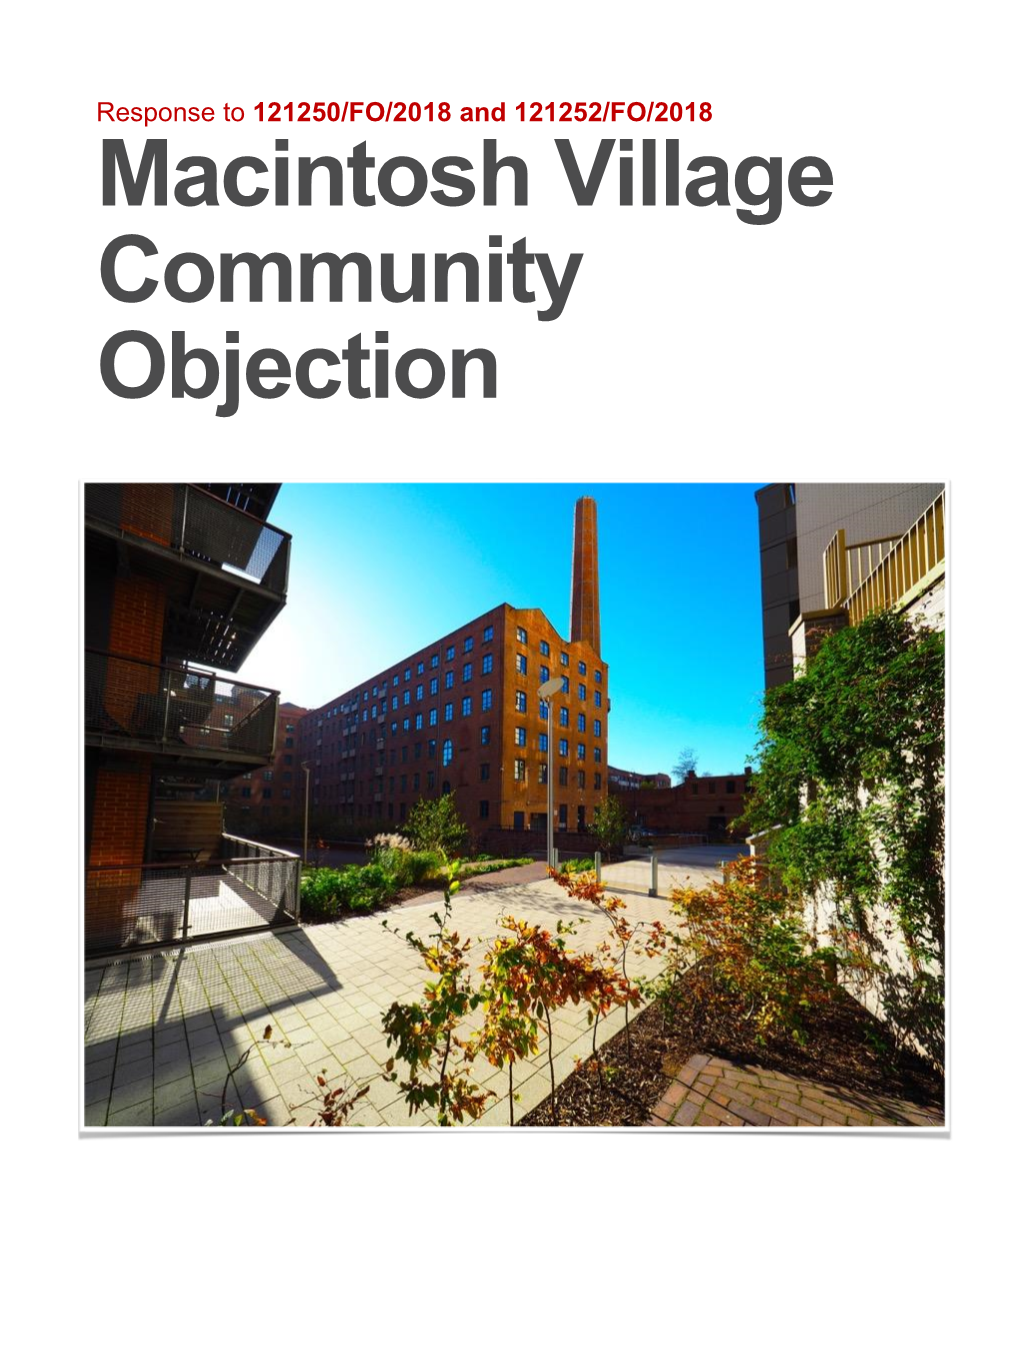 Macintosh Village Community Objection